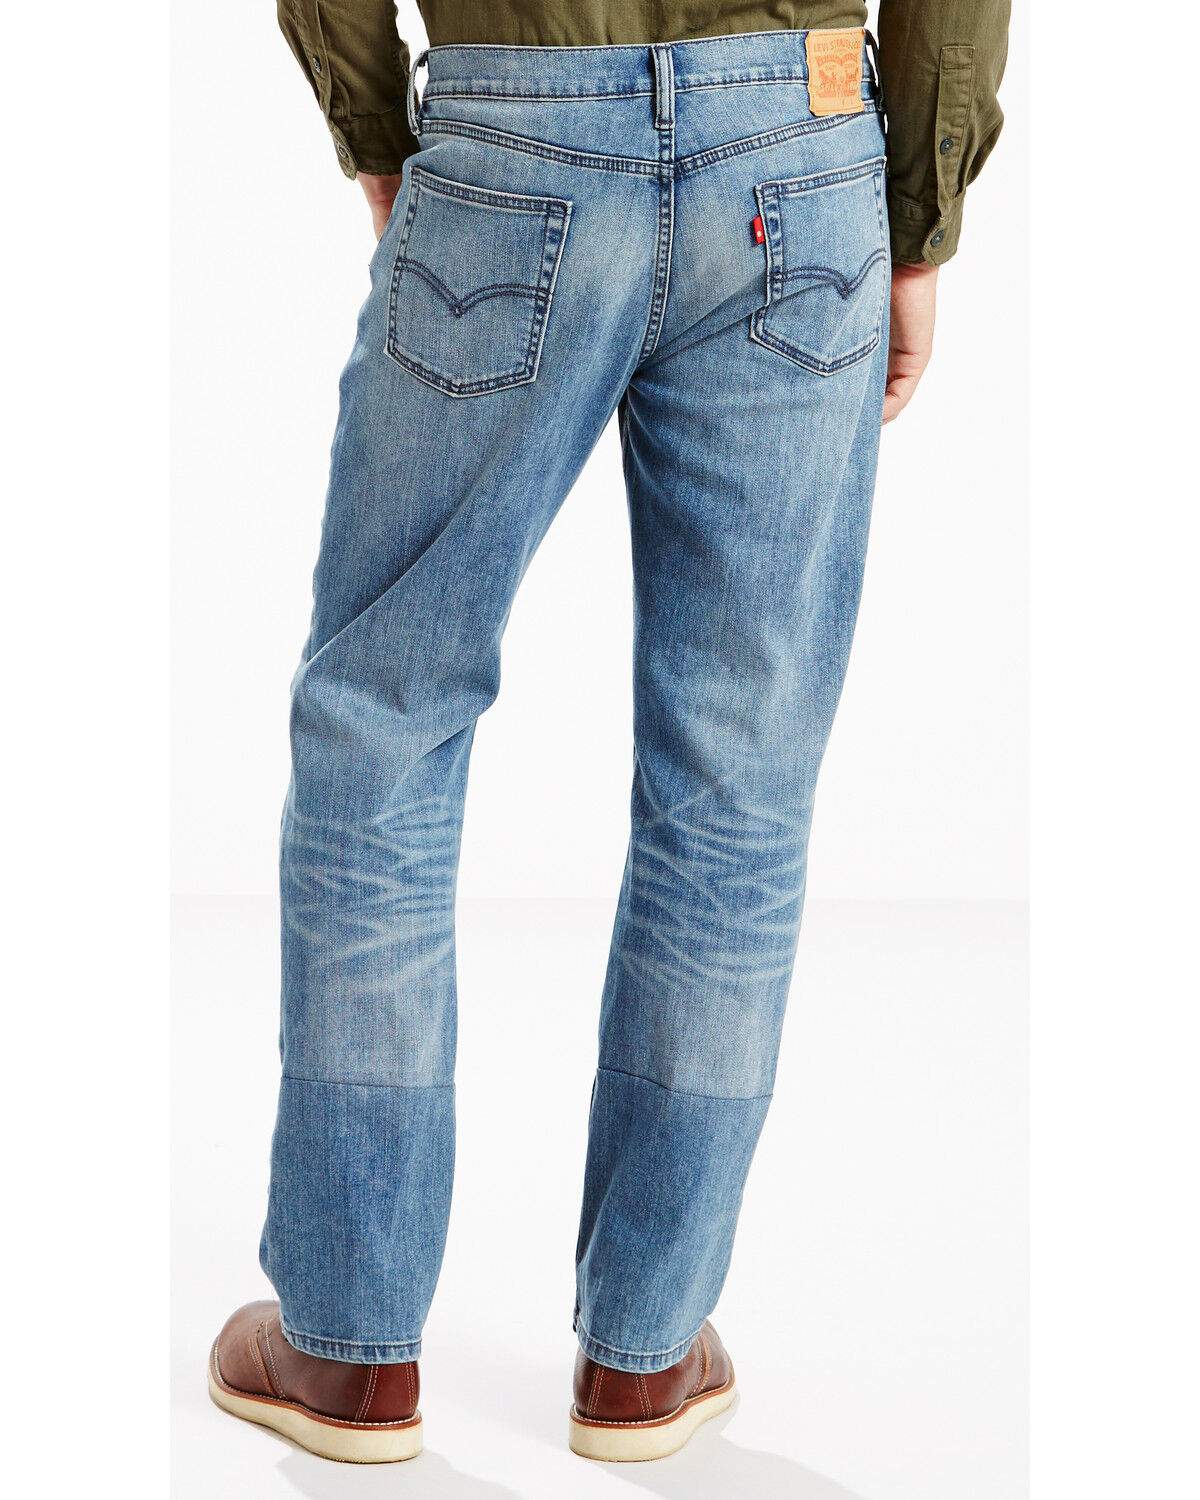 levi's 514 slim straight jeans mens 